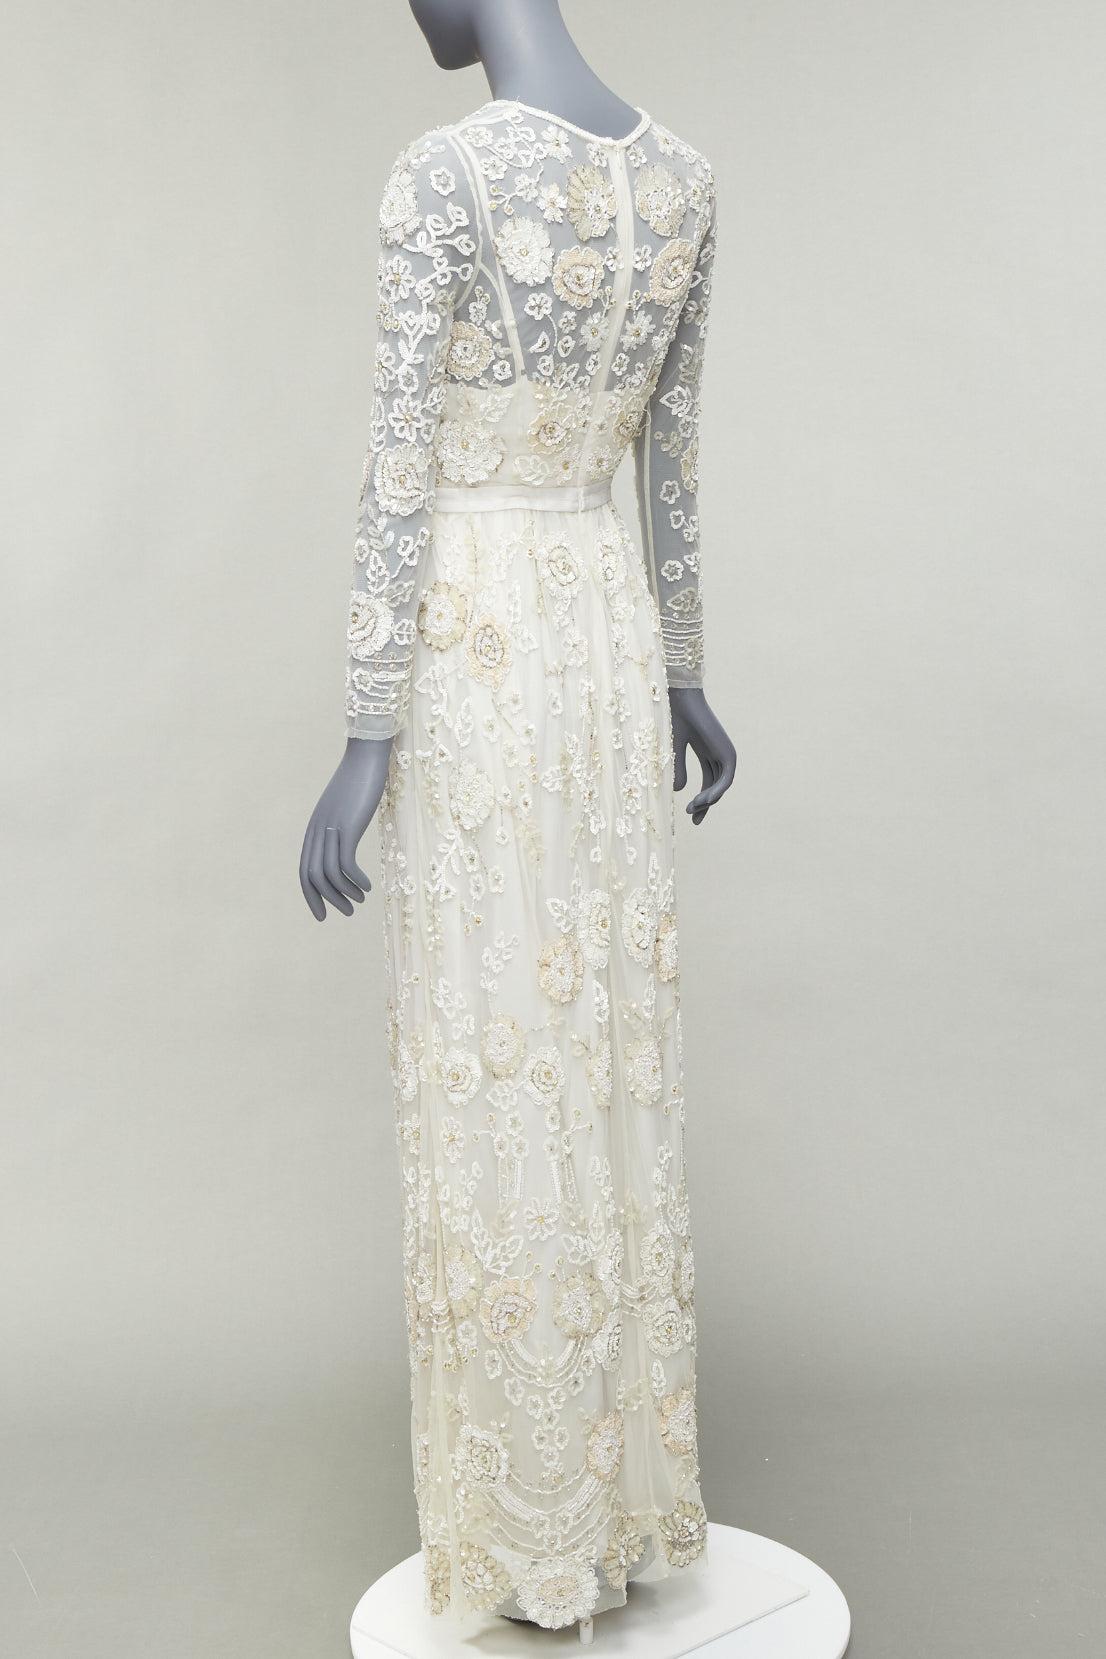 NEEDLE & THREAD Bridal white silver beads embellish chiffon overlay gown UK6 XS 1